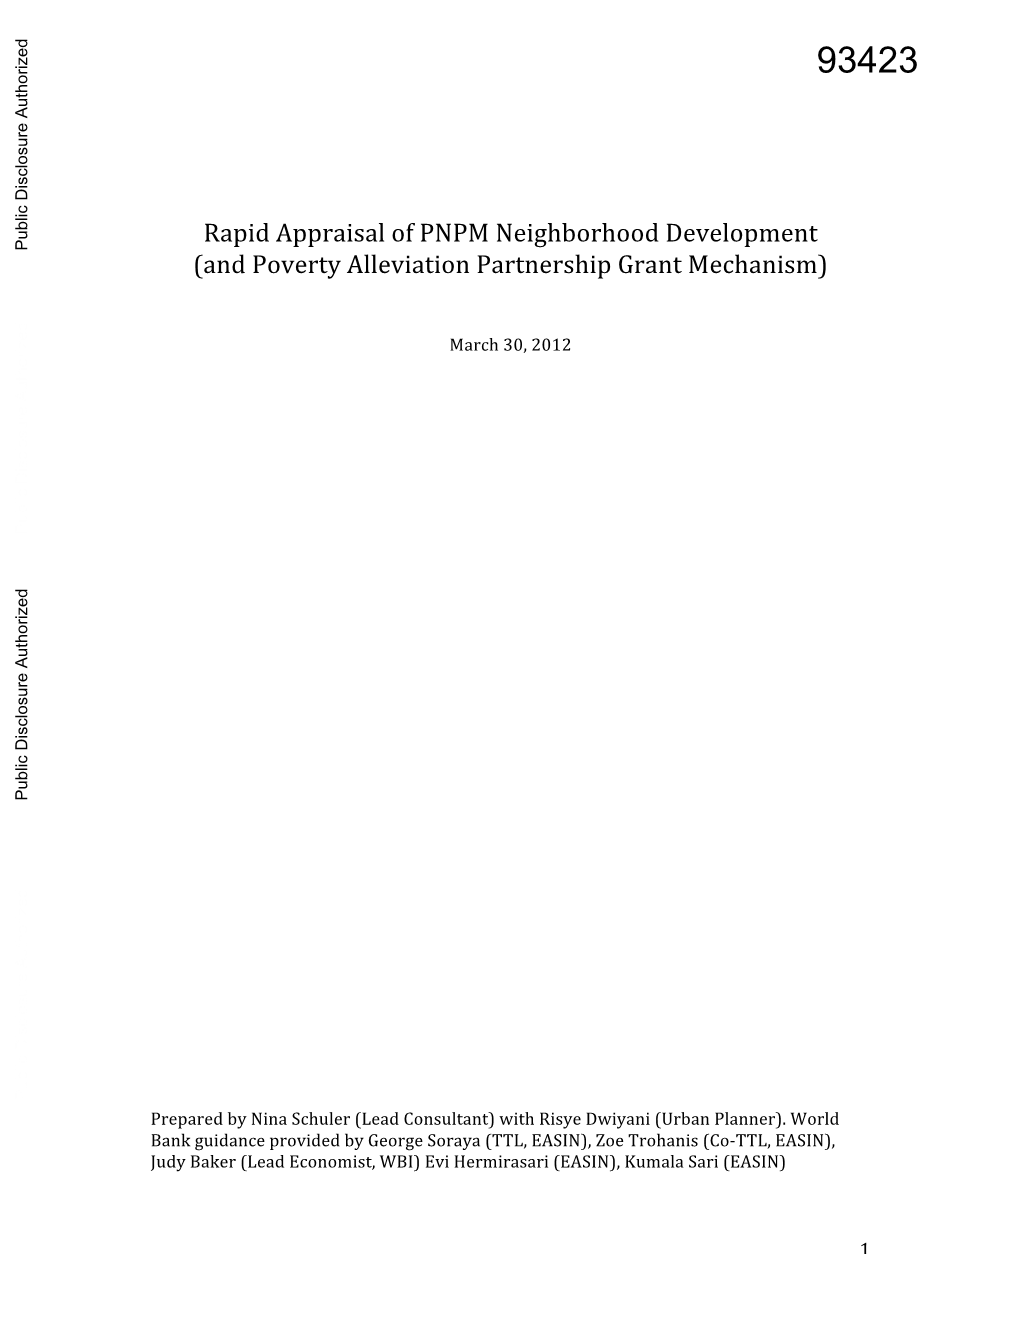 Rapid Appraisal of PNPM Neighborhood Development Public Disclosure Authorized (And Poverty Alleviation Partnership Grant Mechanism)